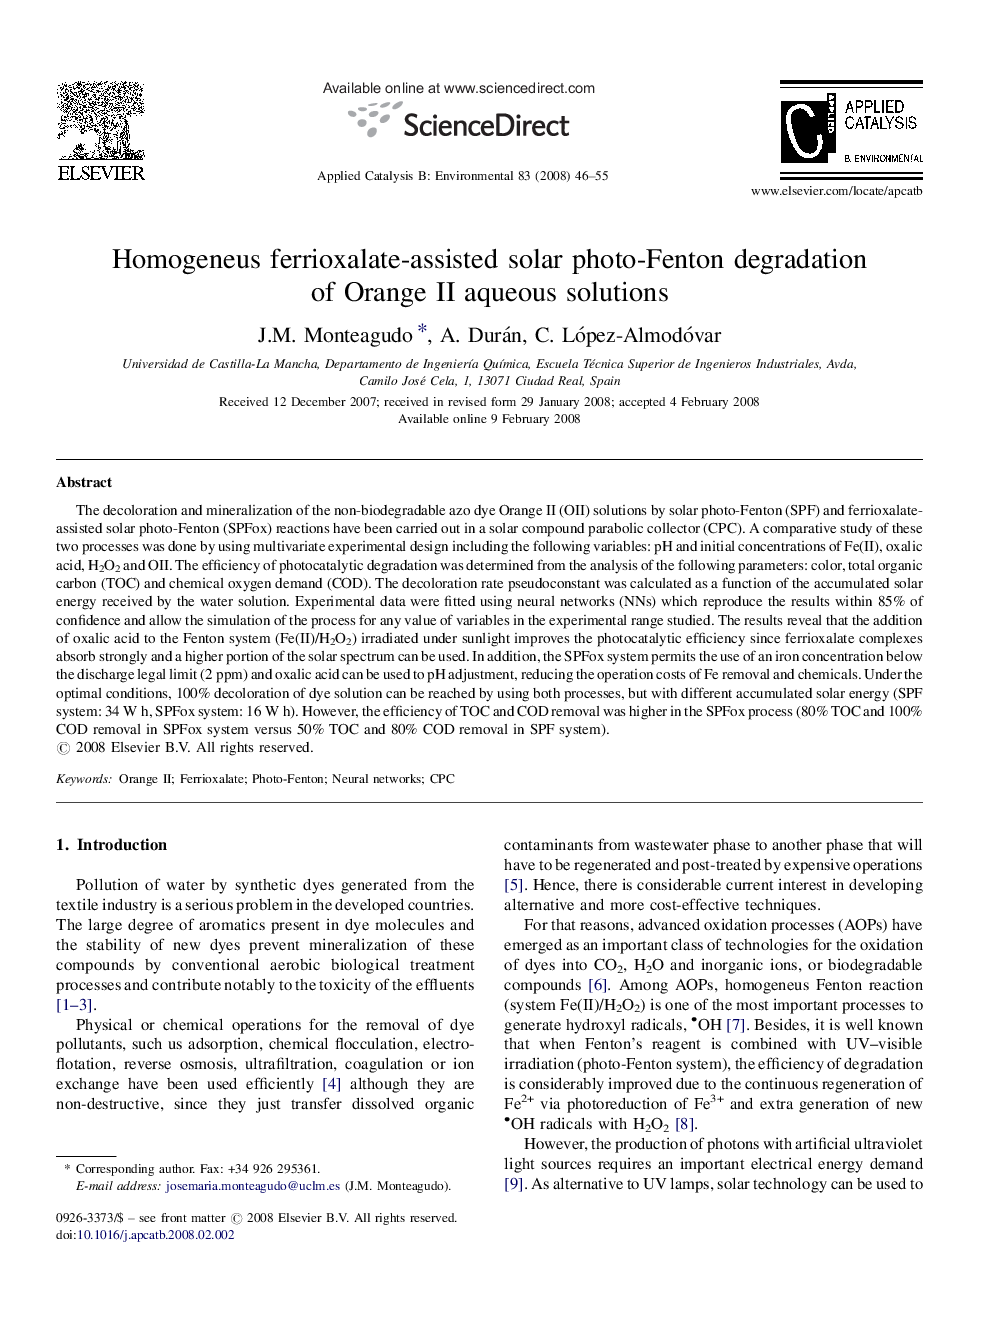 Homogeneus ferrioxalate-assisted solar photo-Fenton degradation of Orange II aqueous solutions